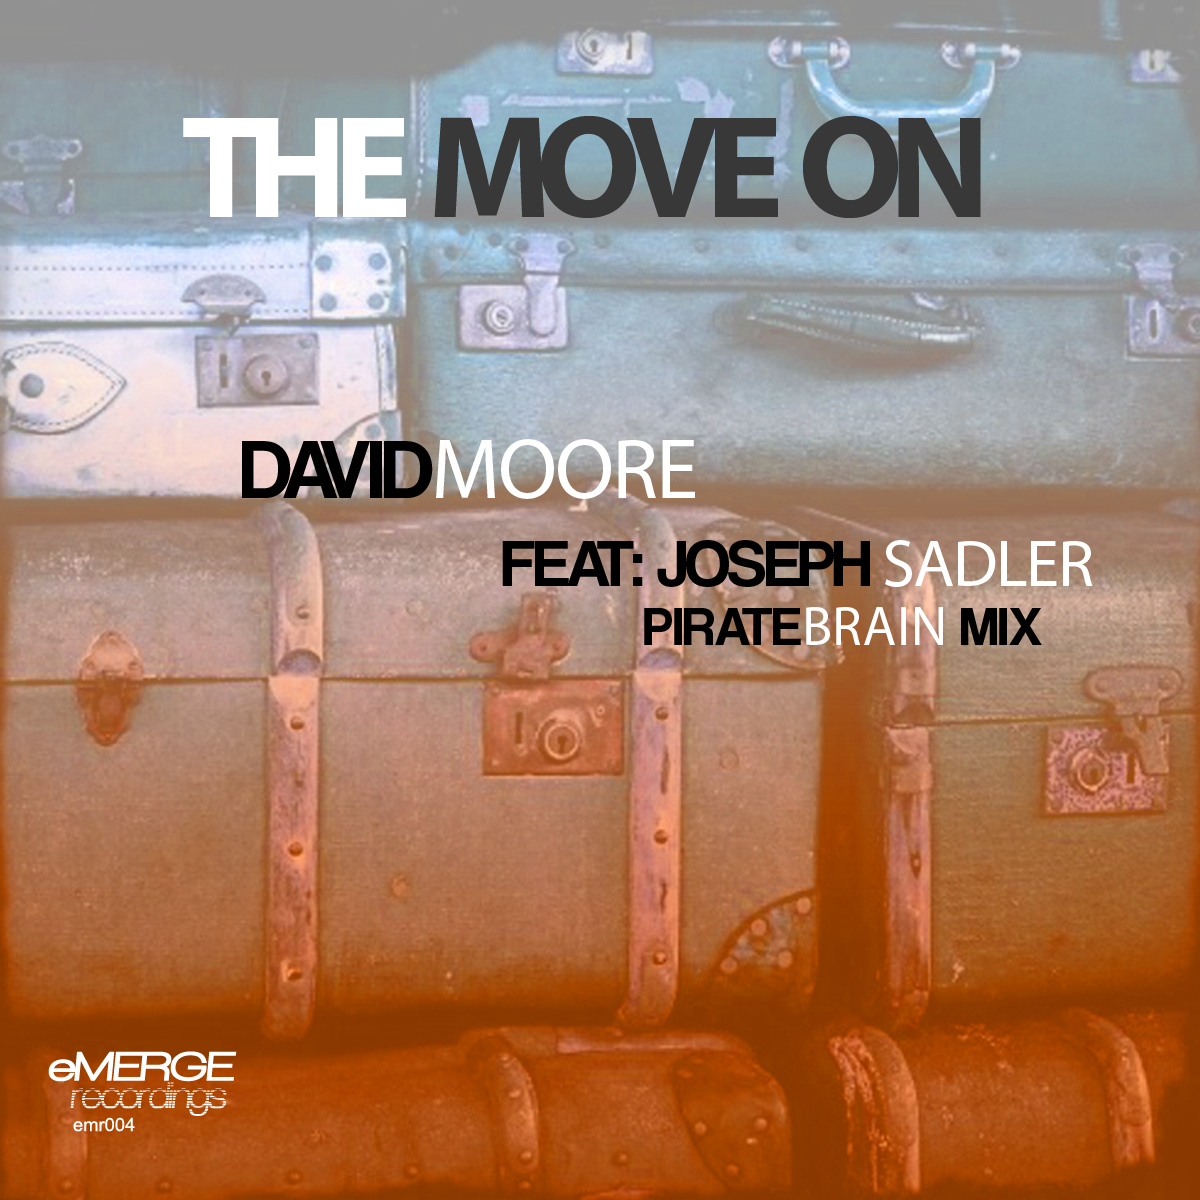 The Move On – David Moore feat. Joeseph Sadler